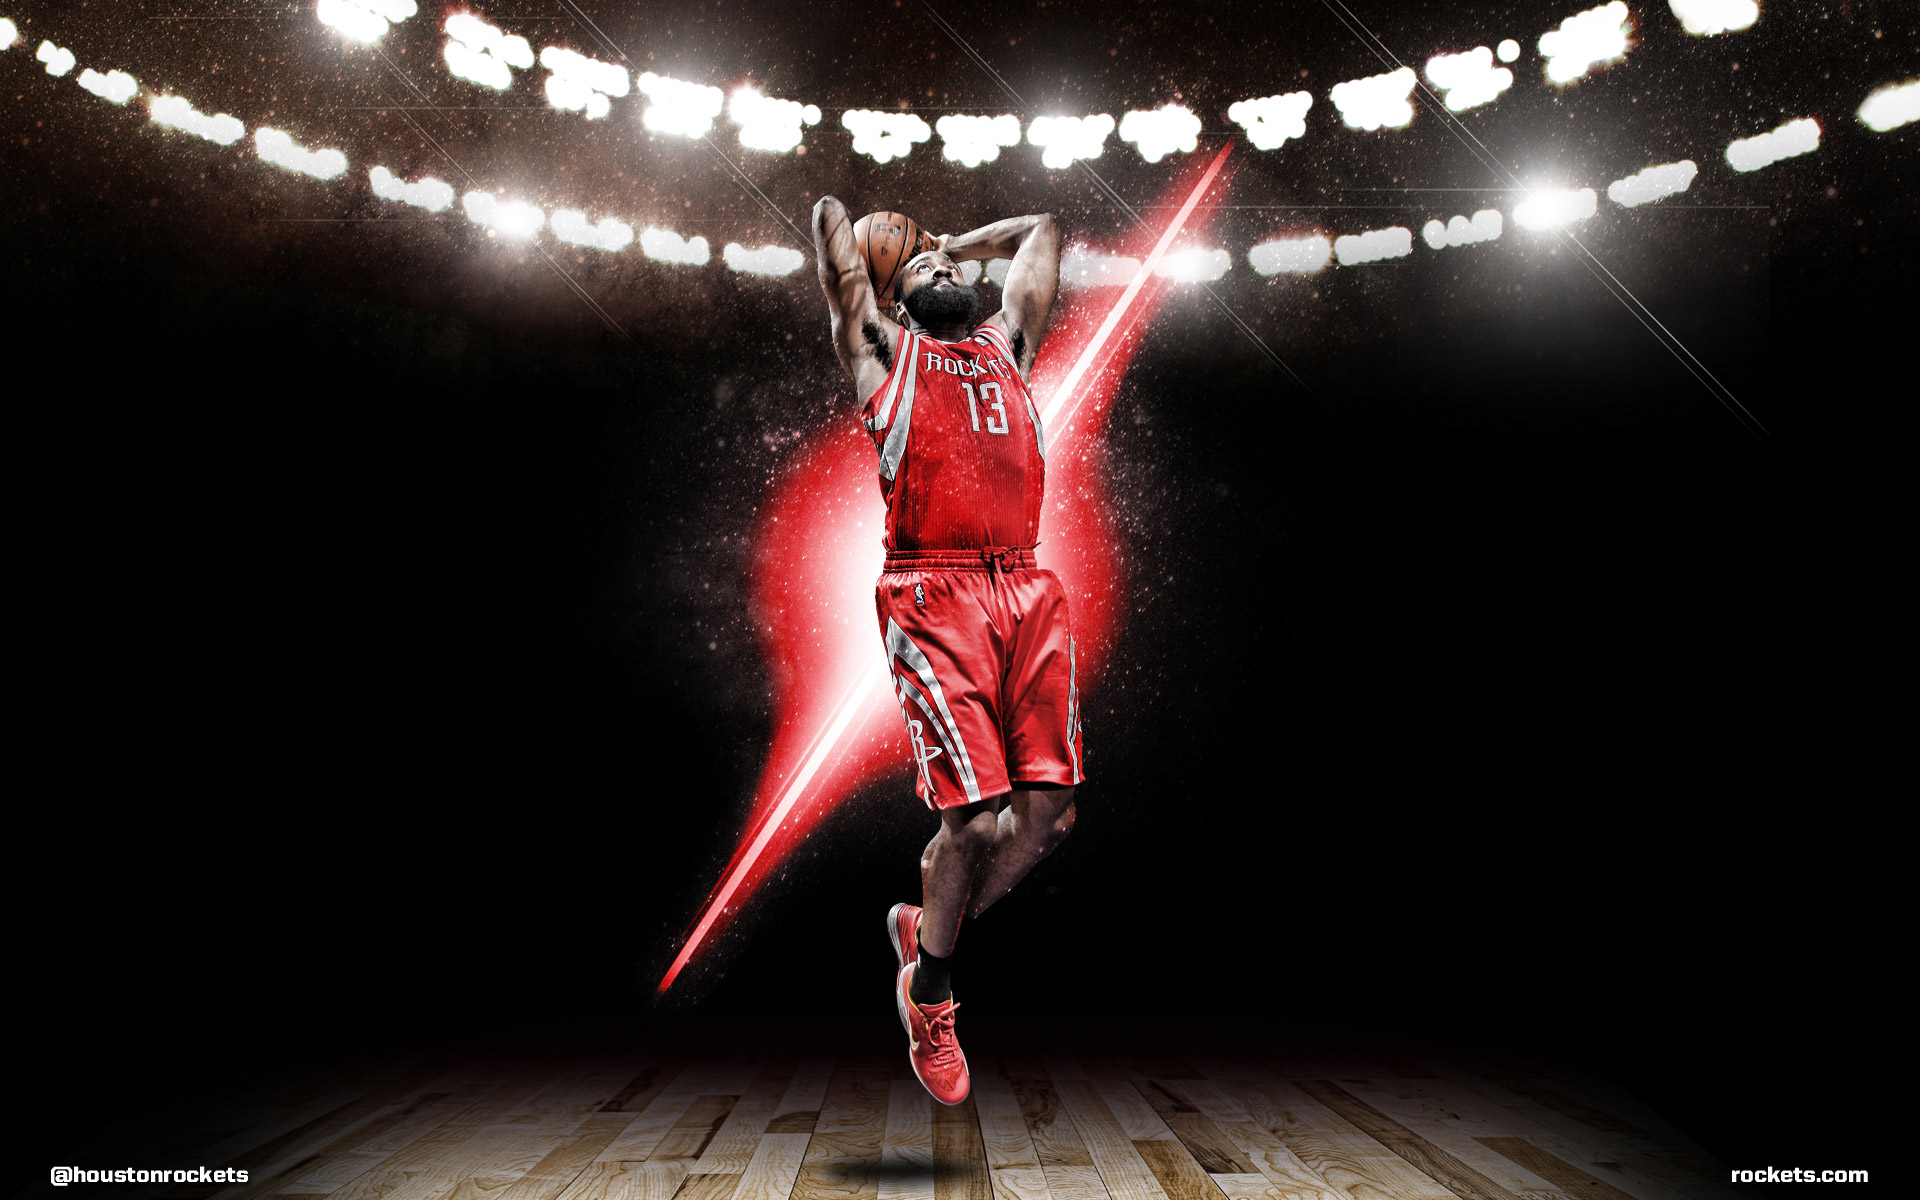 Nba Wallpaper Jmes Harden Top Super Star In Houston Rockets